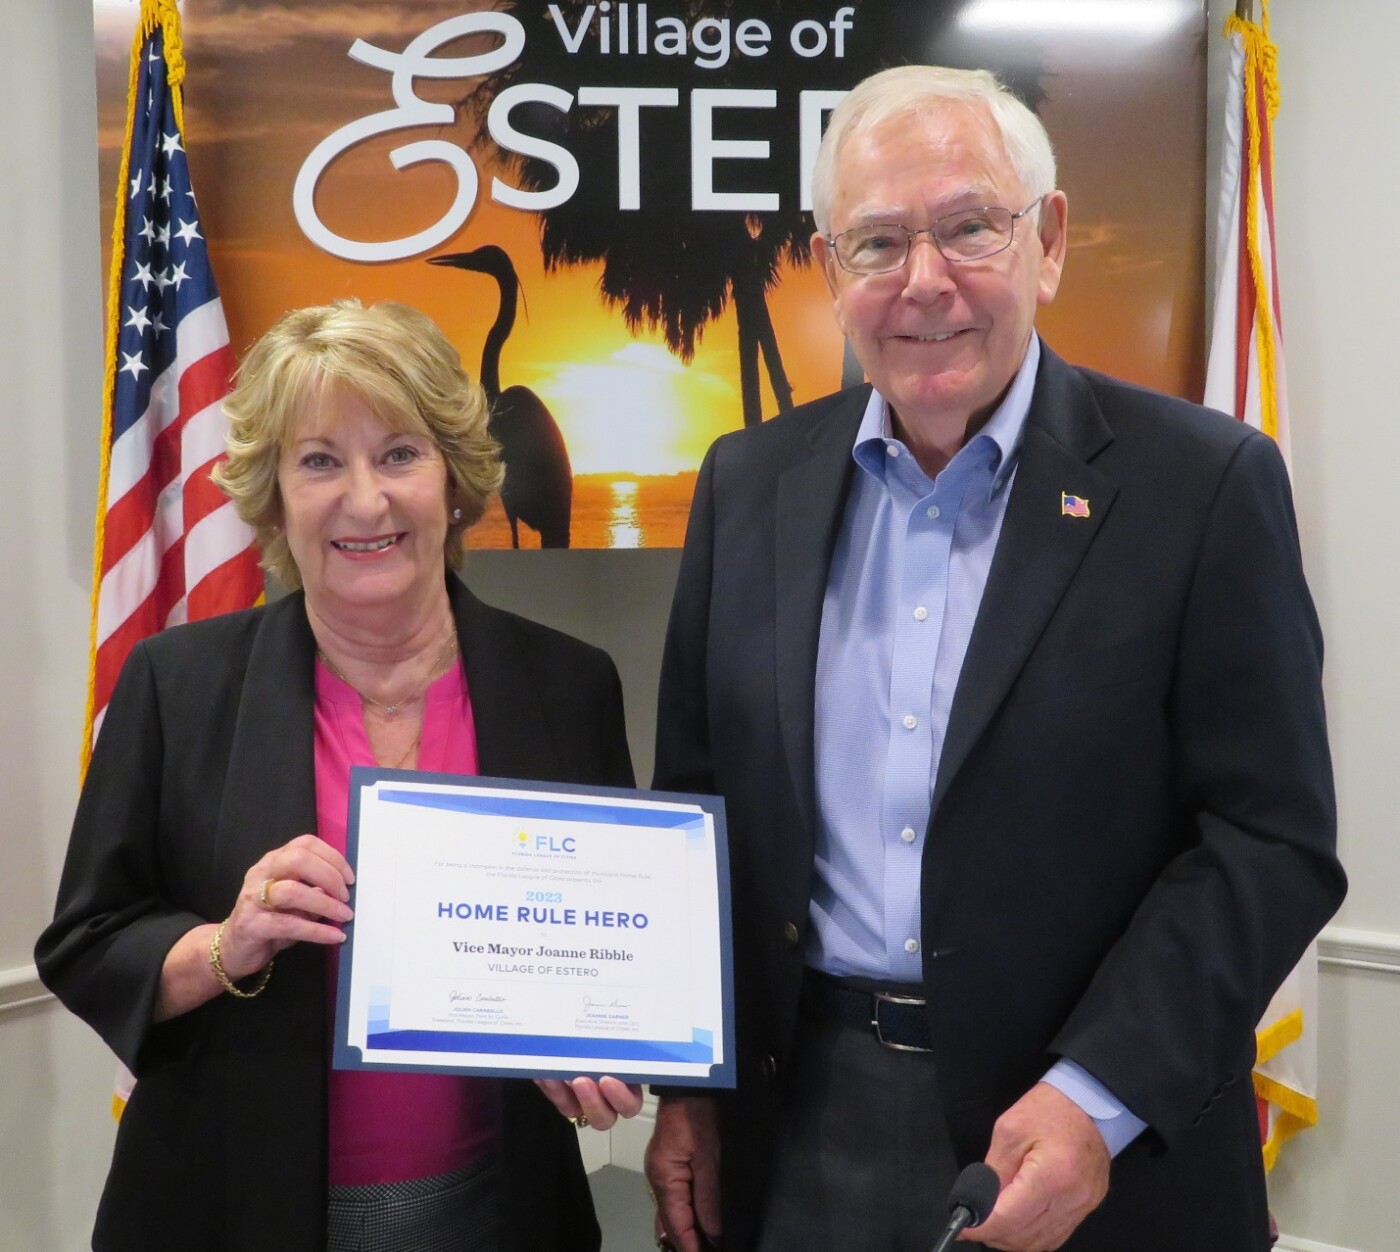 Mayor Jon McLain presenting Vice Mayor Joanne Ribble with the Florida League of Cities “Home Rule Hero Award.”